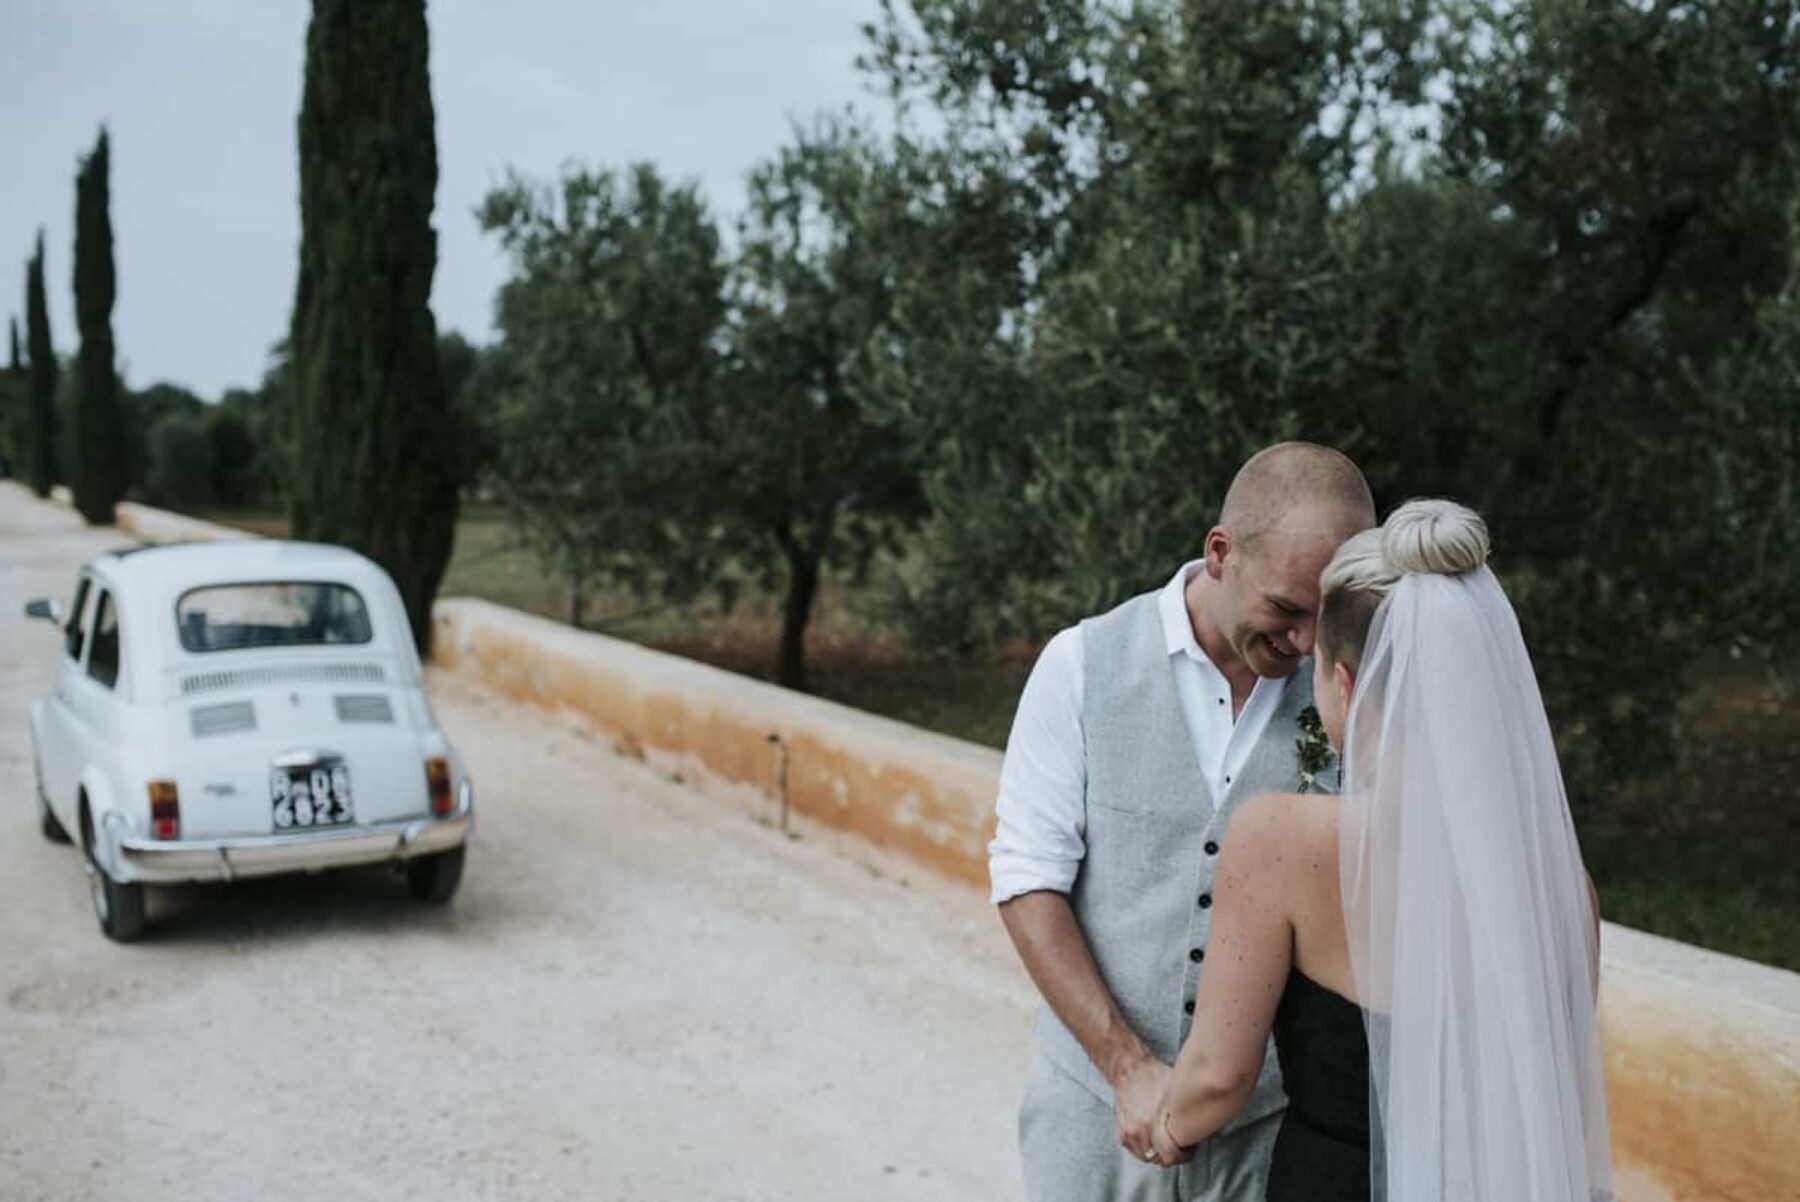 Destination wedding in Puglia Italy - photography by Damien Milan